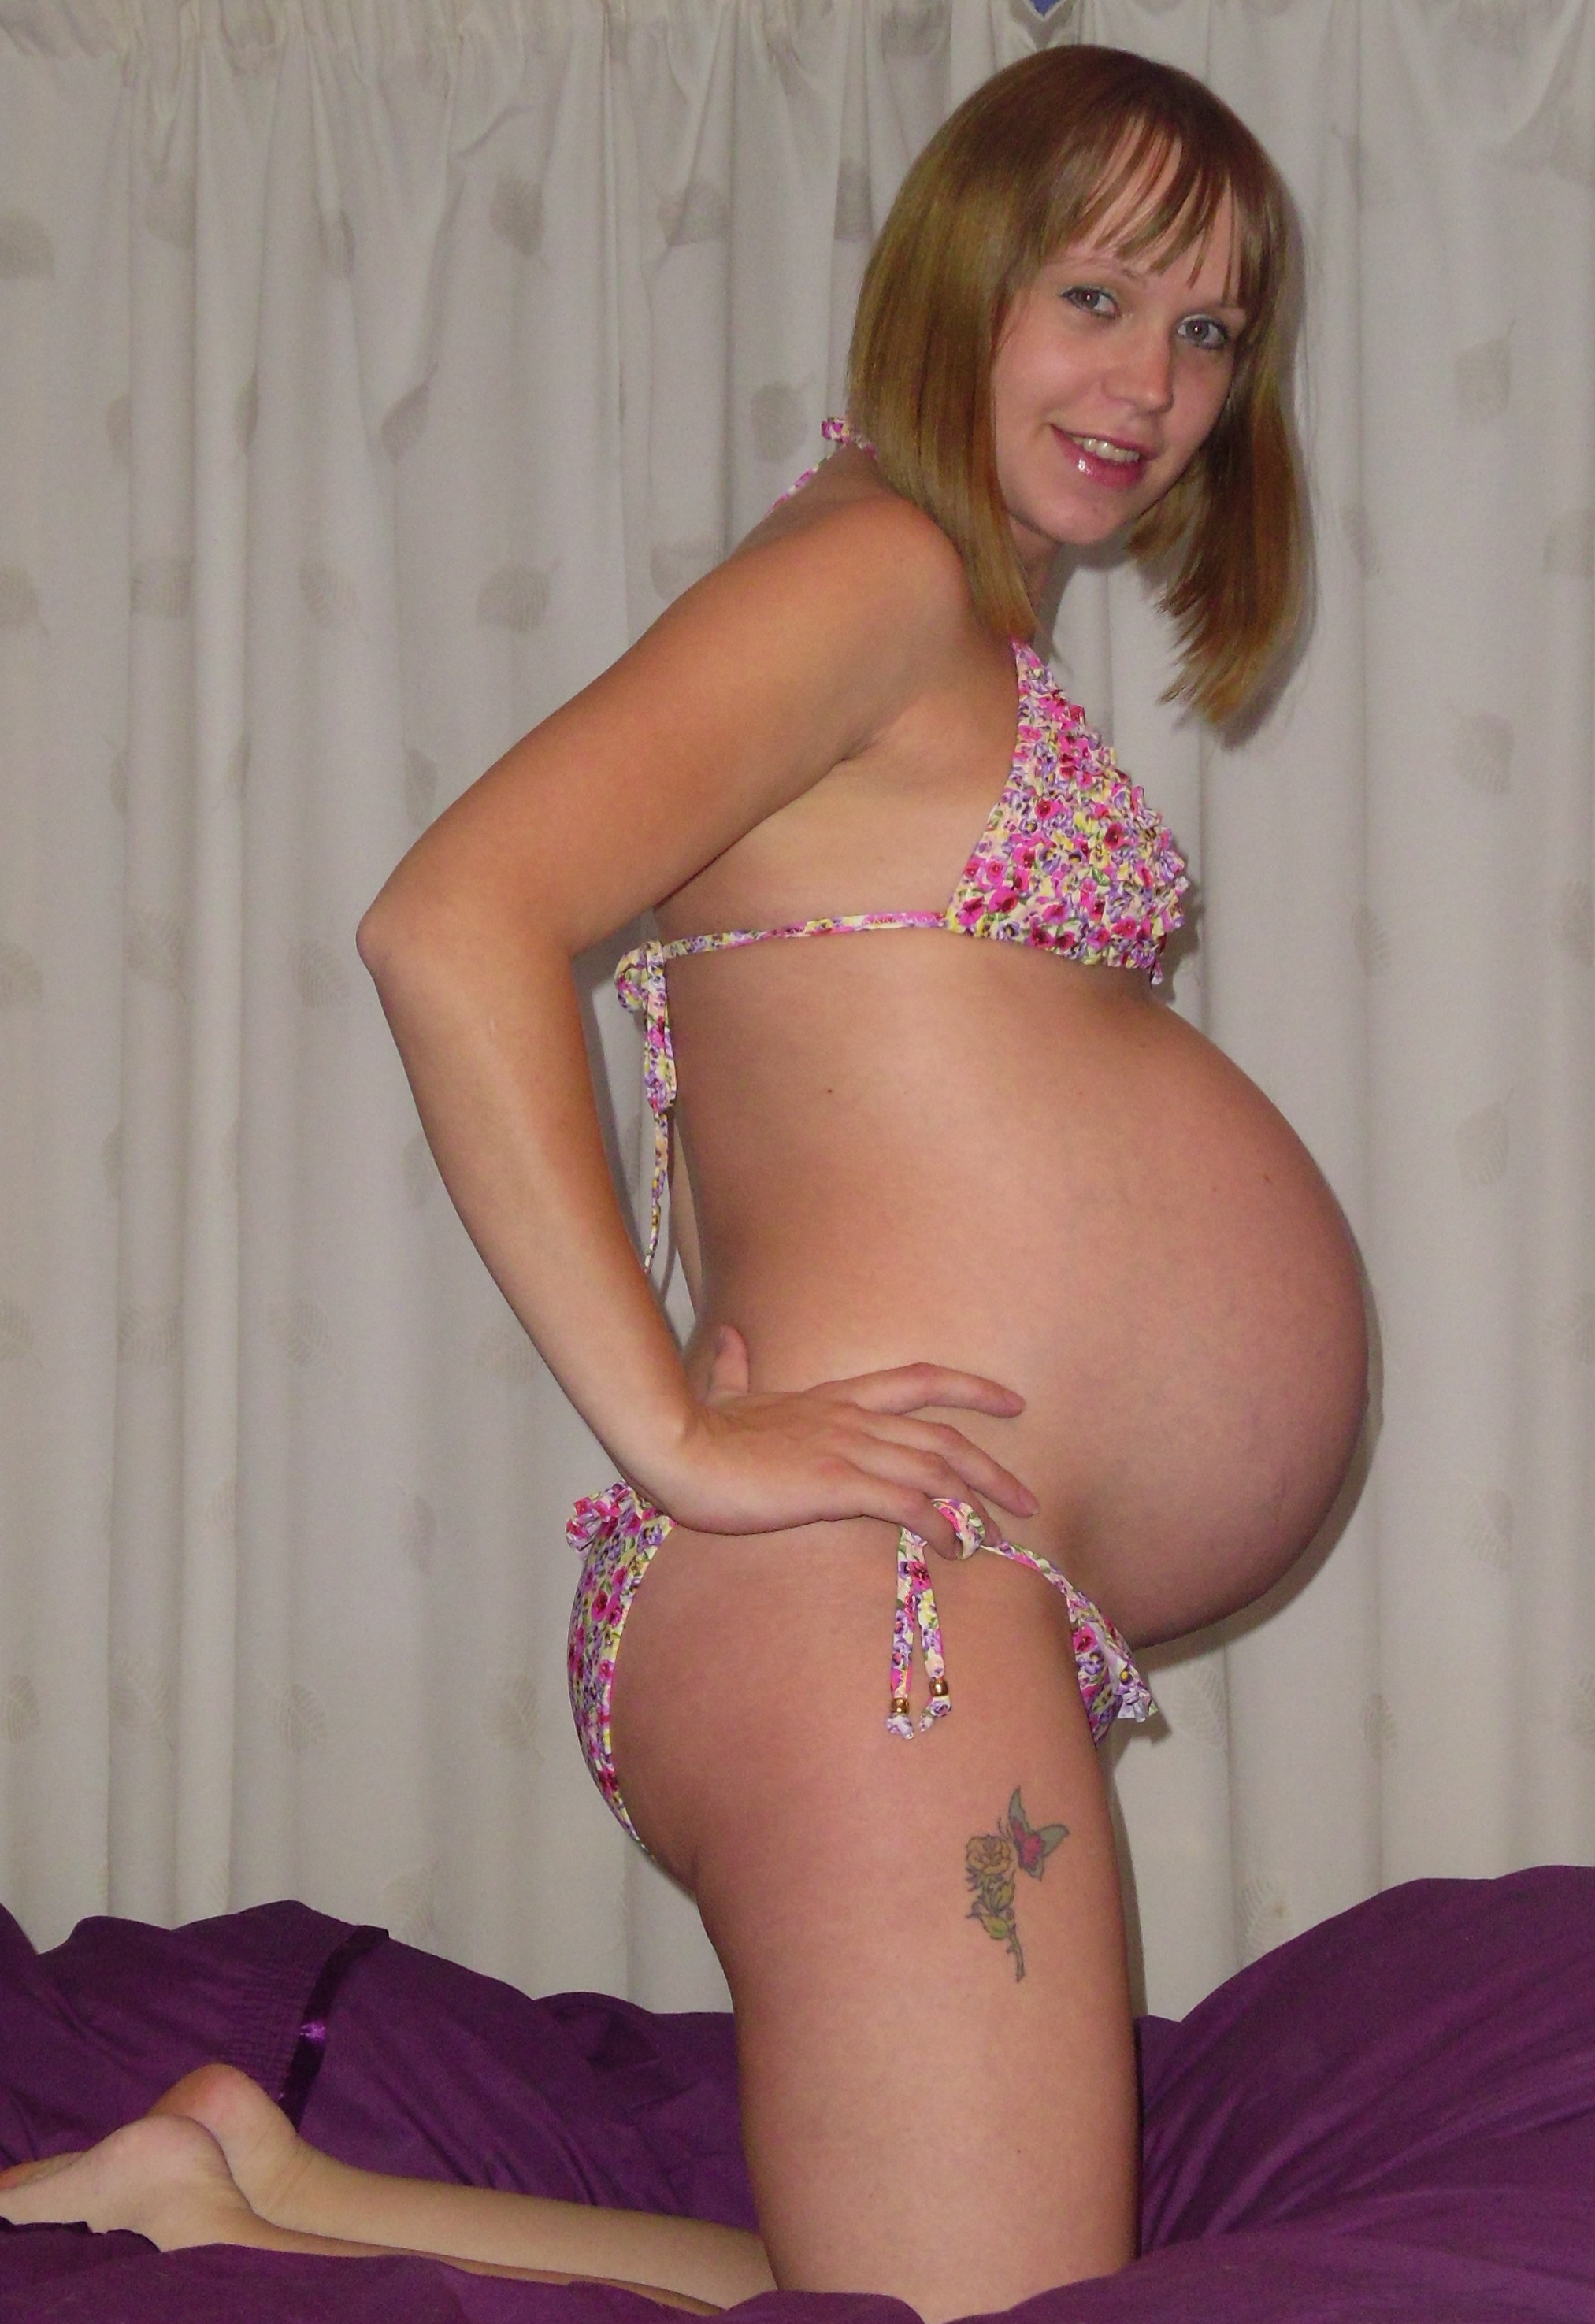 Skimpy maternity bikinis